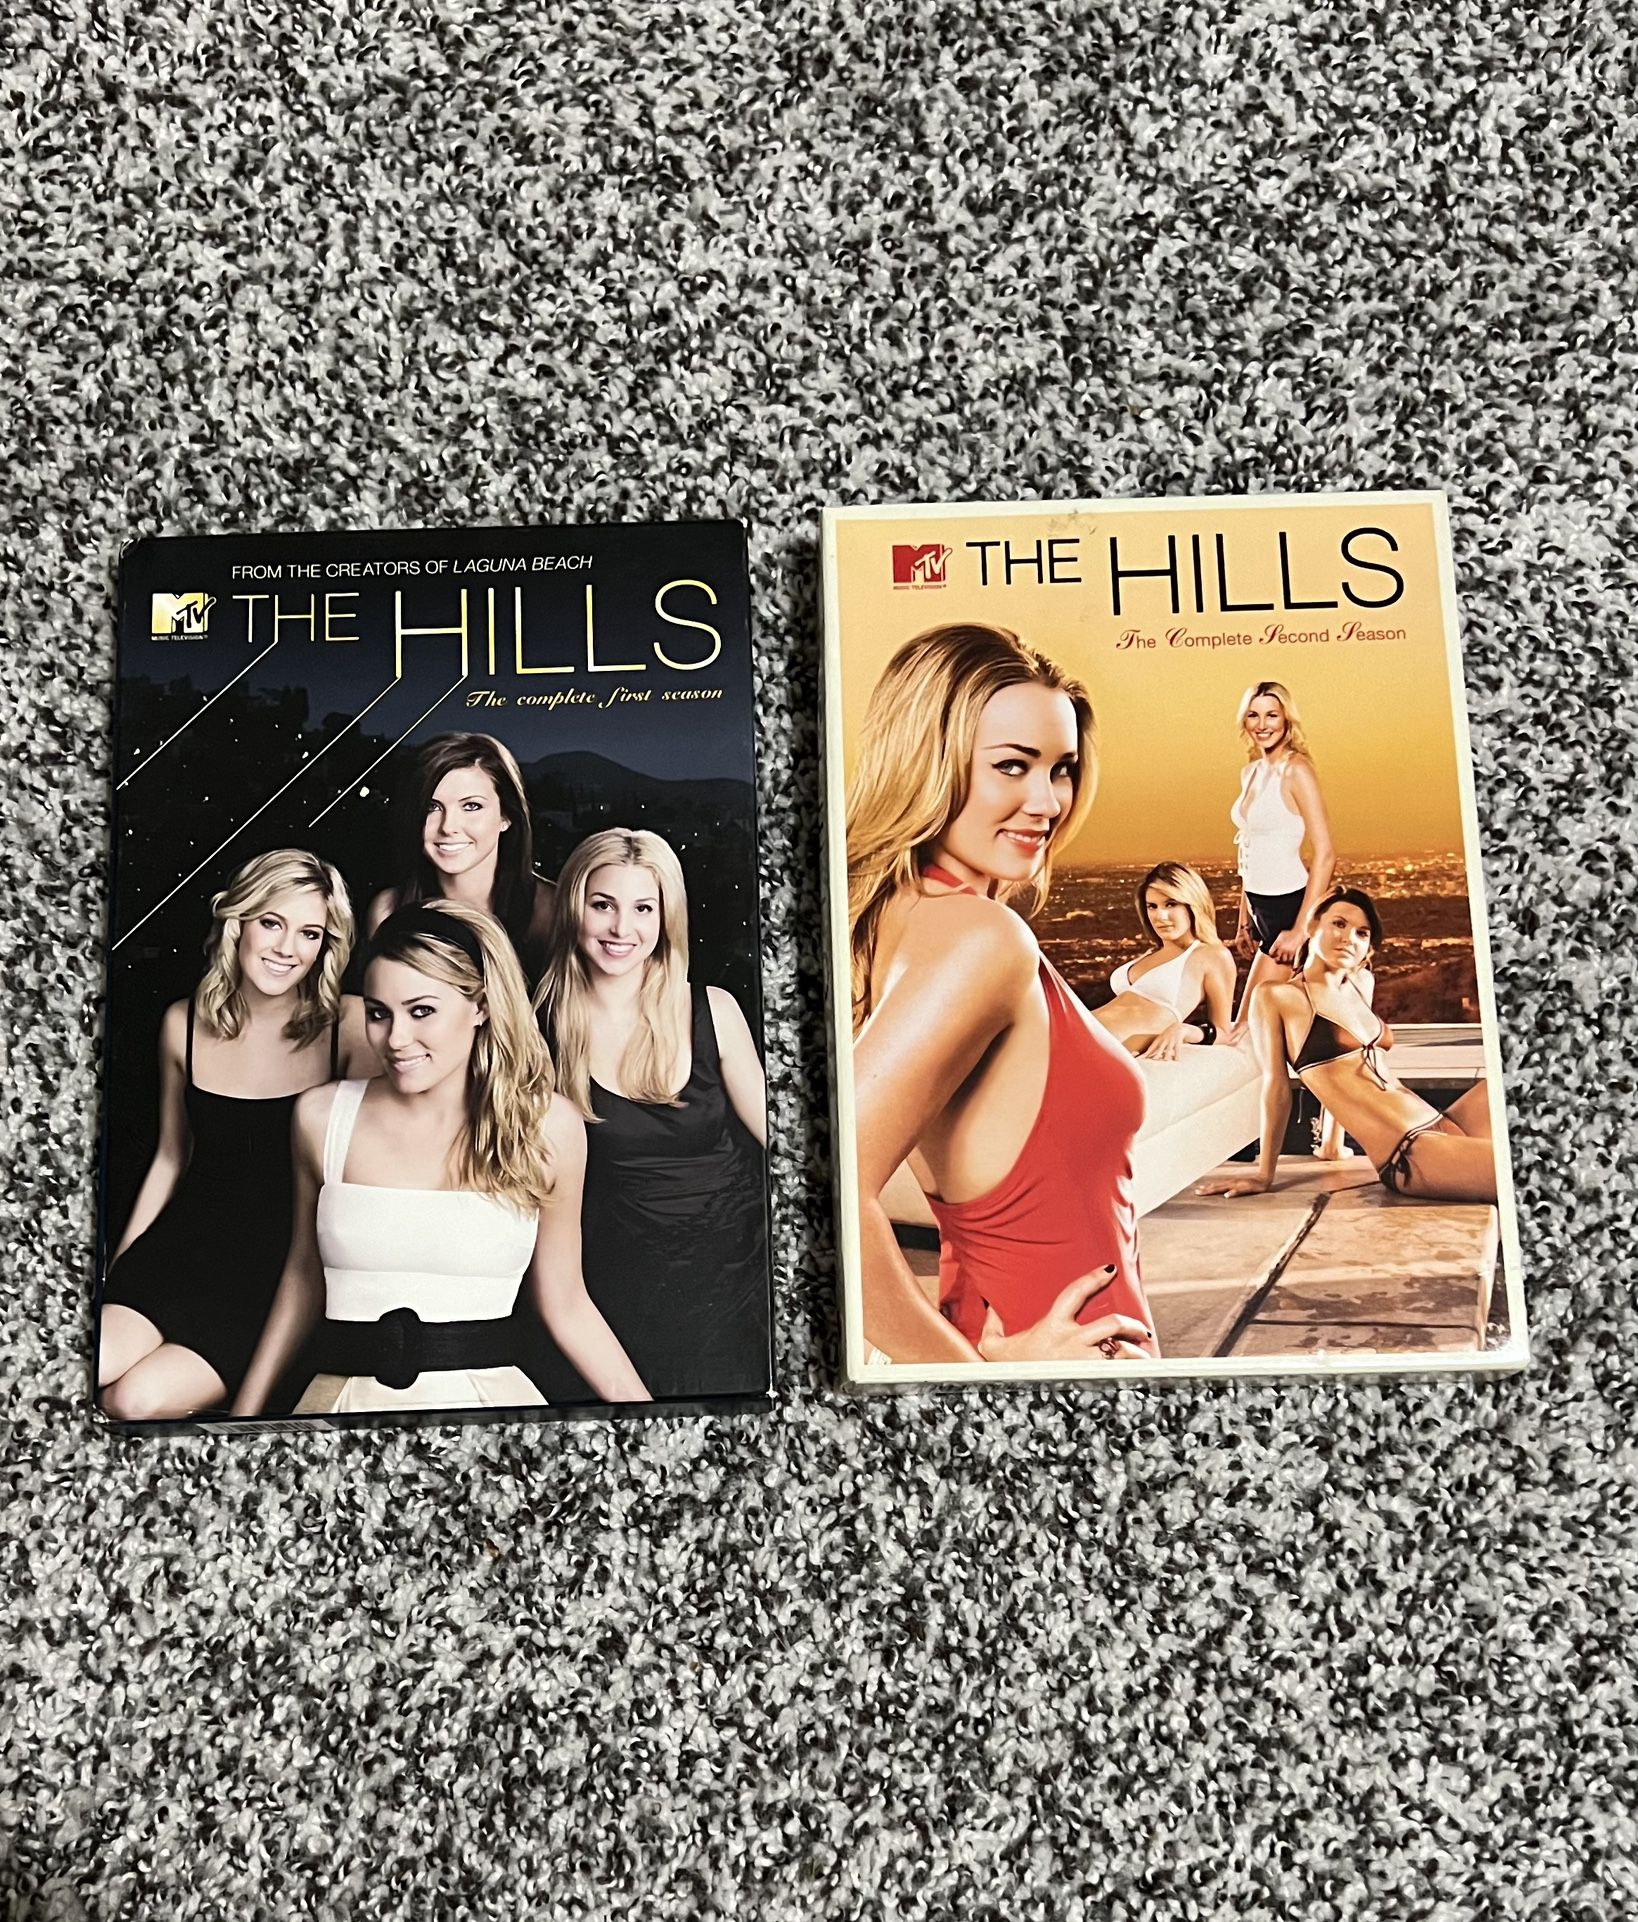 The Hills: complete series set (DVD) MTV